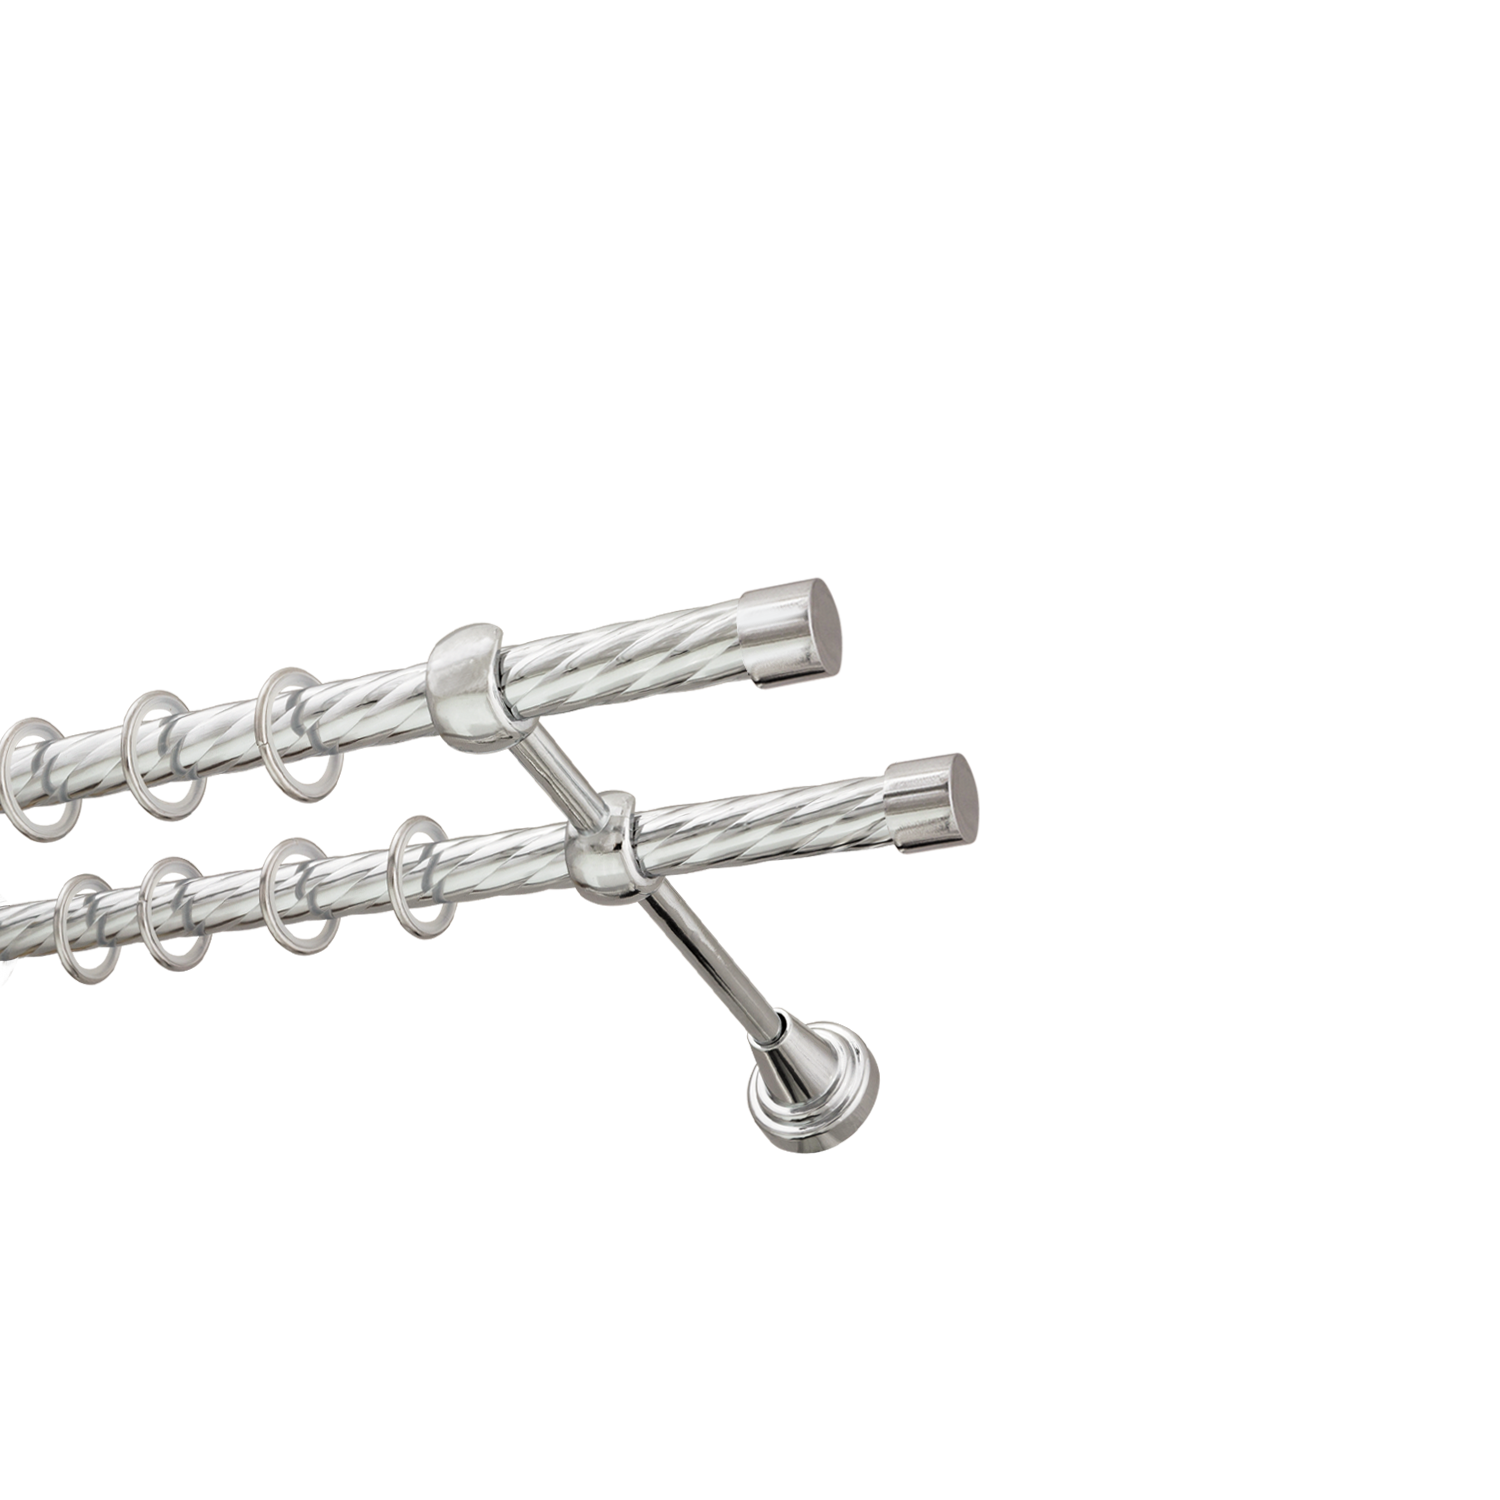 Металлический карниз для штор Заглушка, двухрядный 16/16 мм, серебро, витая штанга, длина 240 см - фото Wikidecor.ru